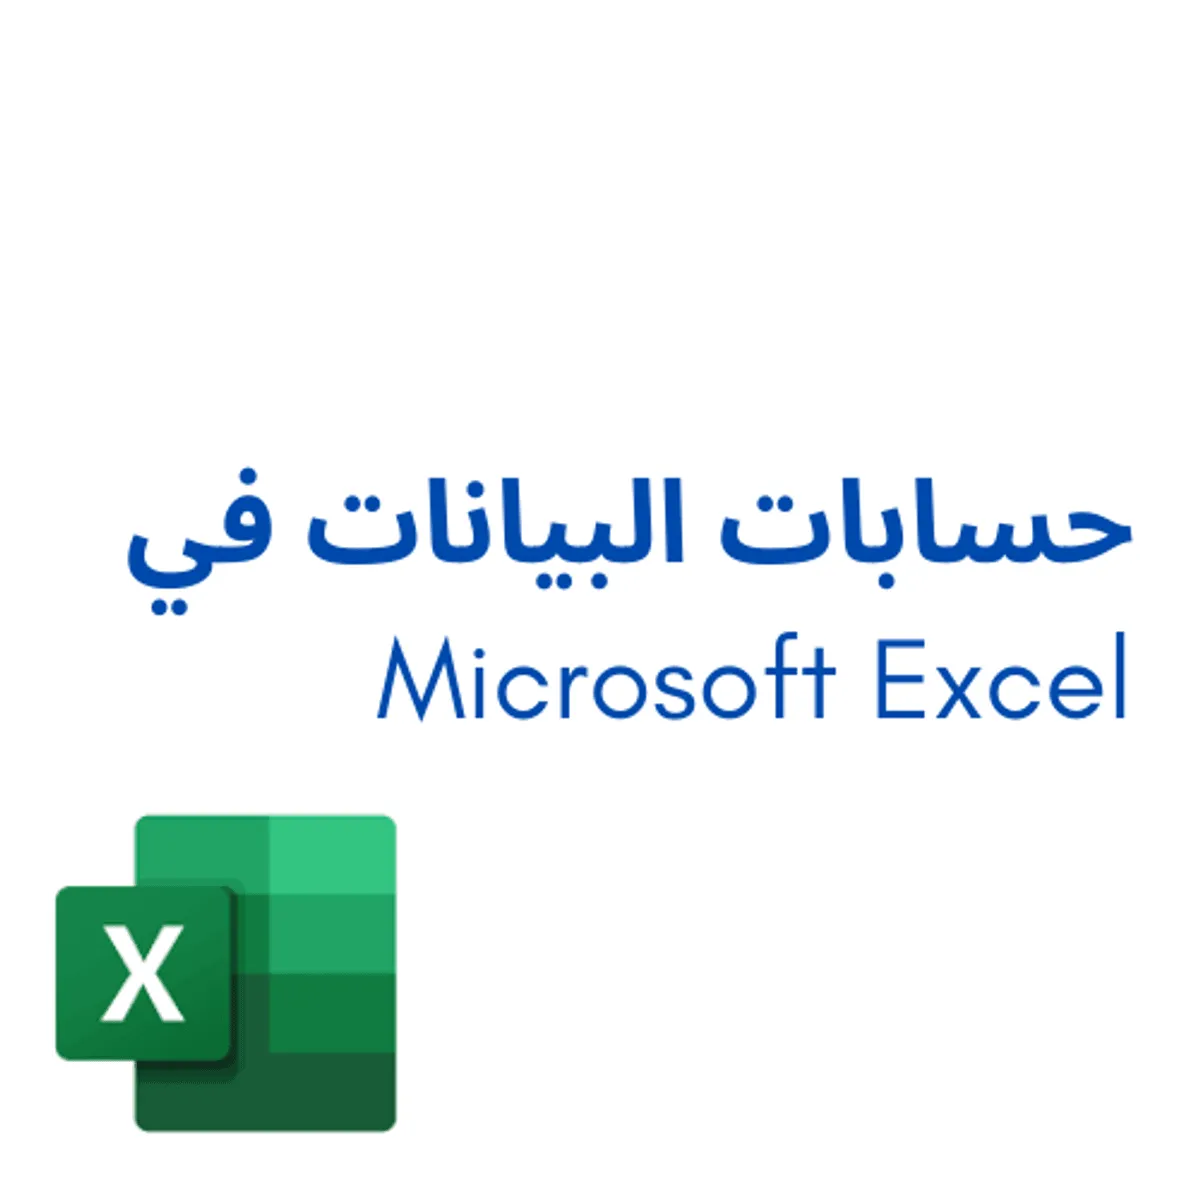 Microsoft Excel حسابات البيانات في